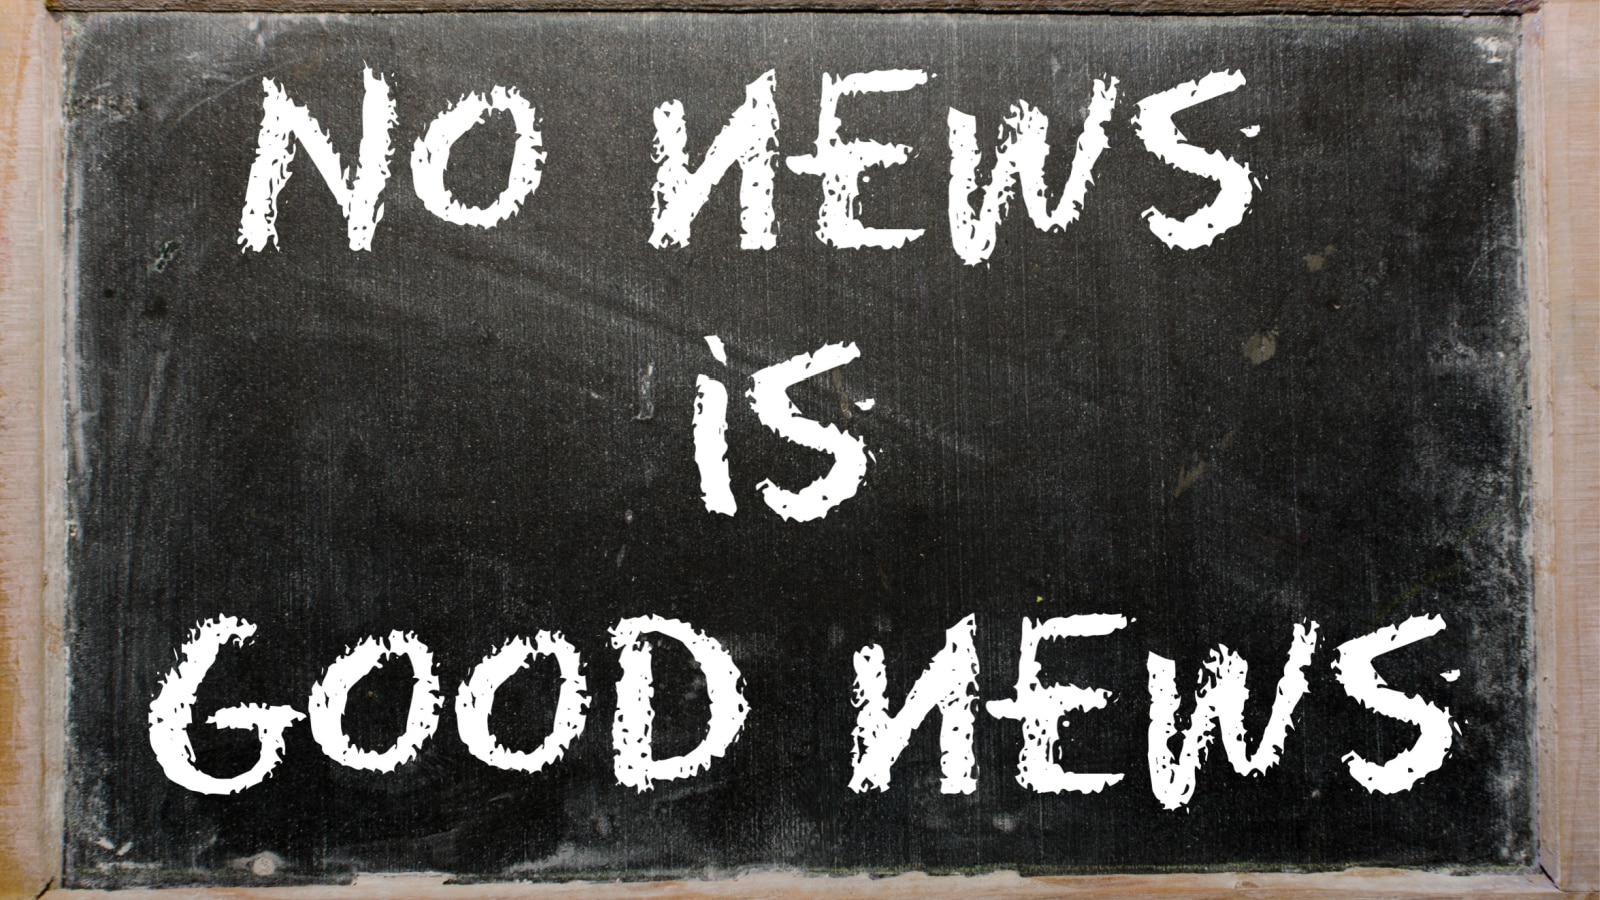 Blackboard writings "No news is good news"